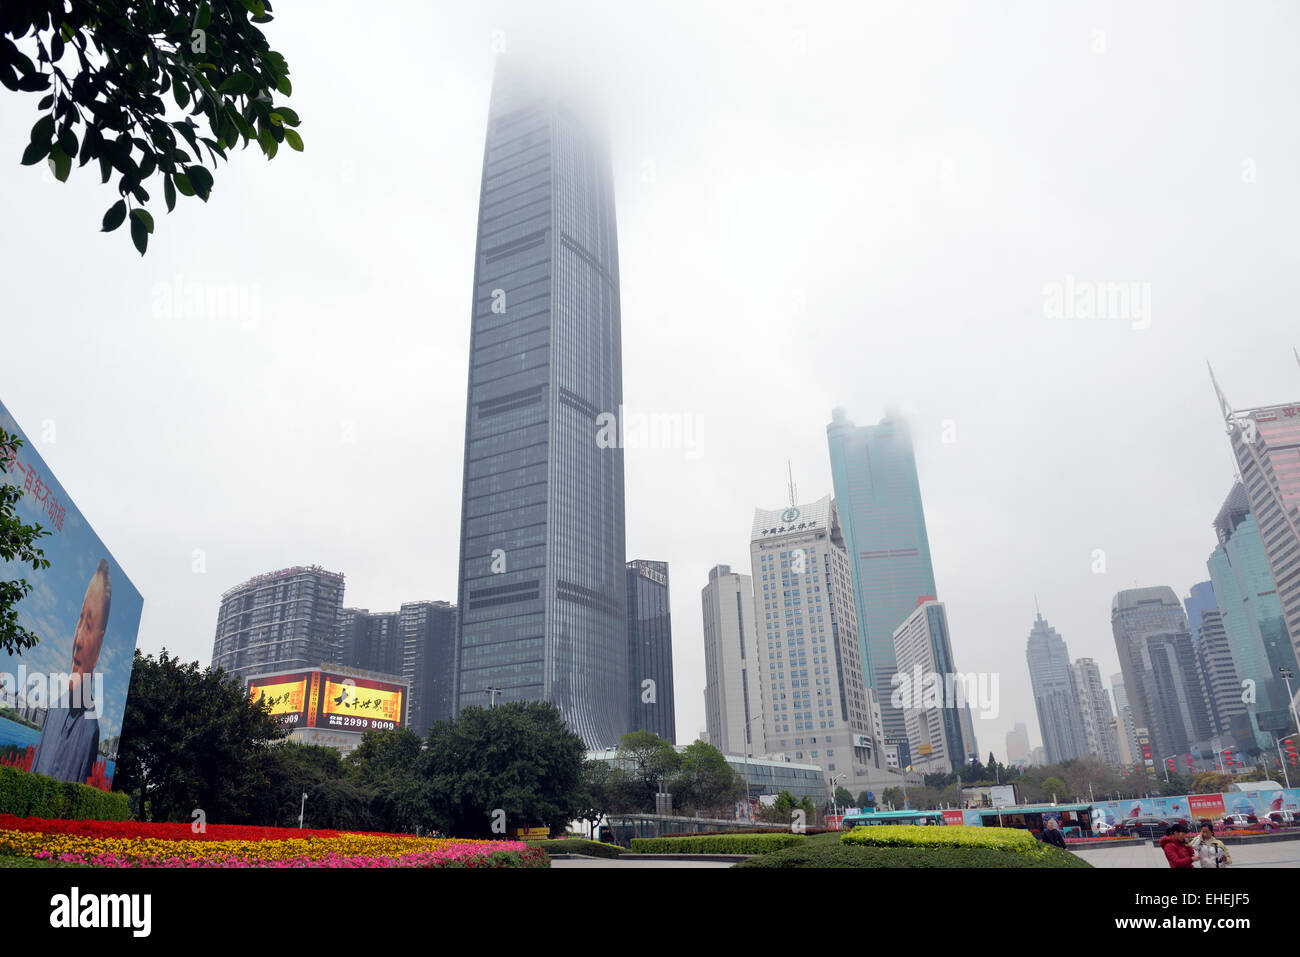 Skyscraper KK100 in Shenzhen, China. Stock Photo